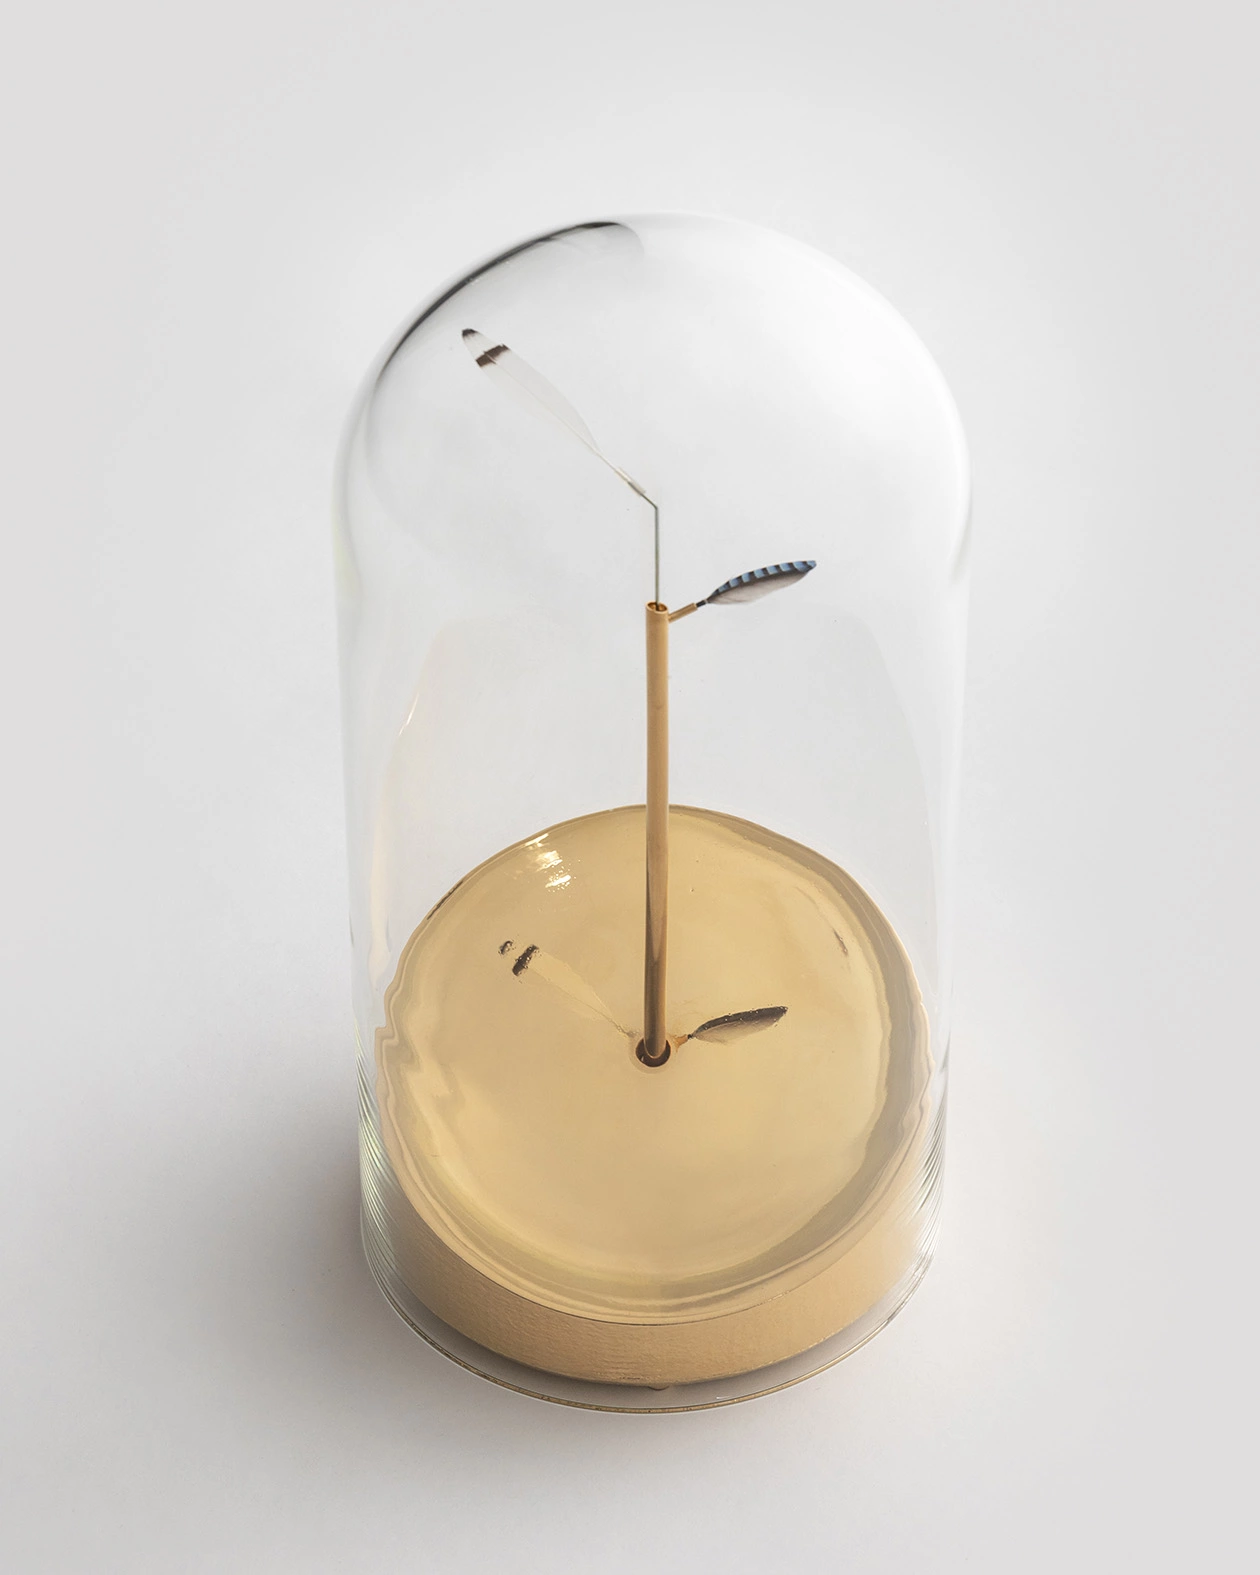 Time Flies - Studio Wieki Somers - Object - Galerie kreo